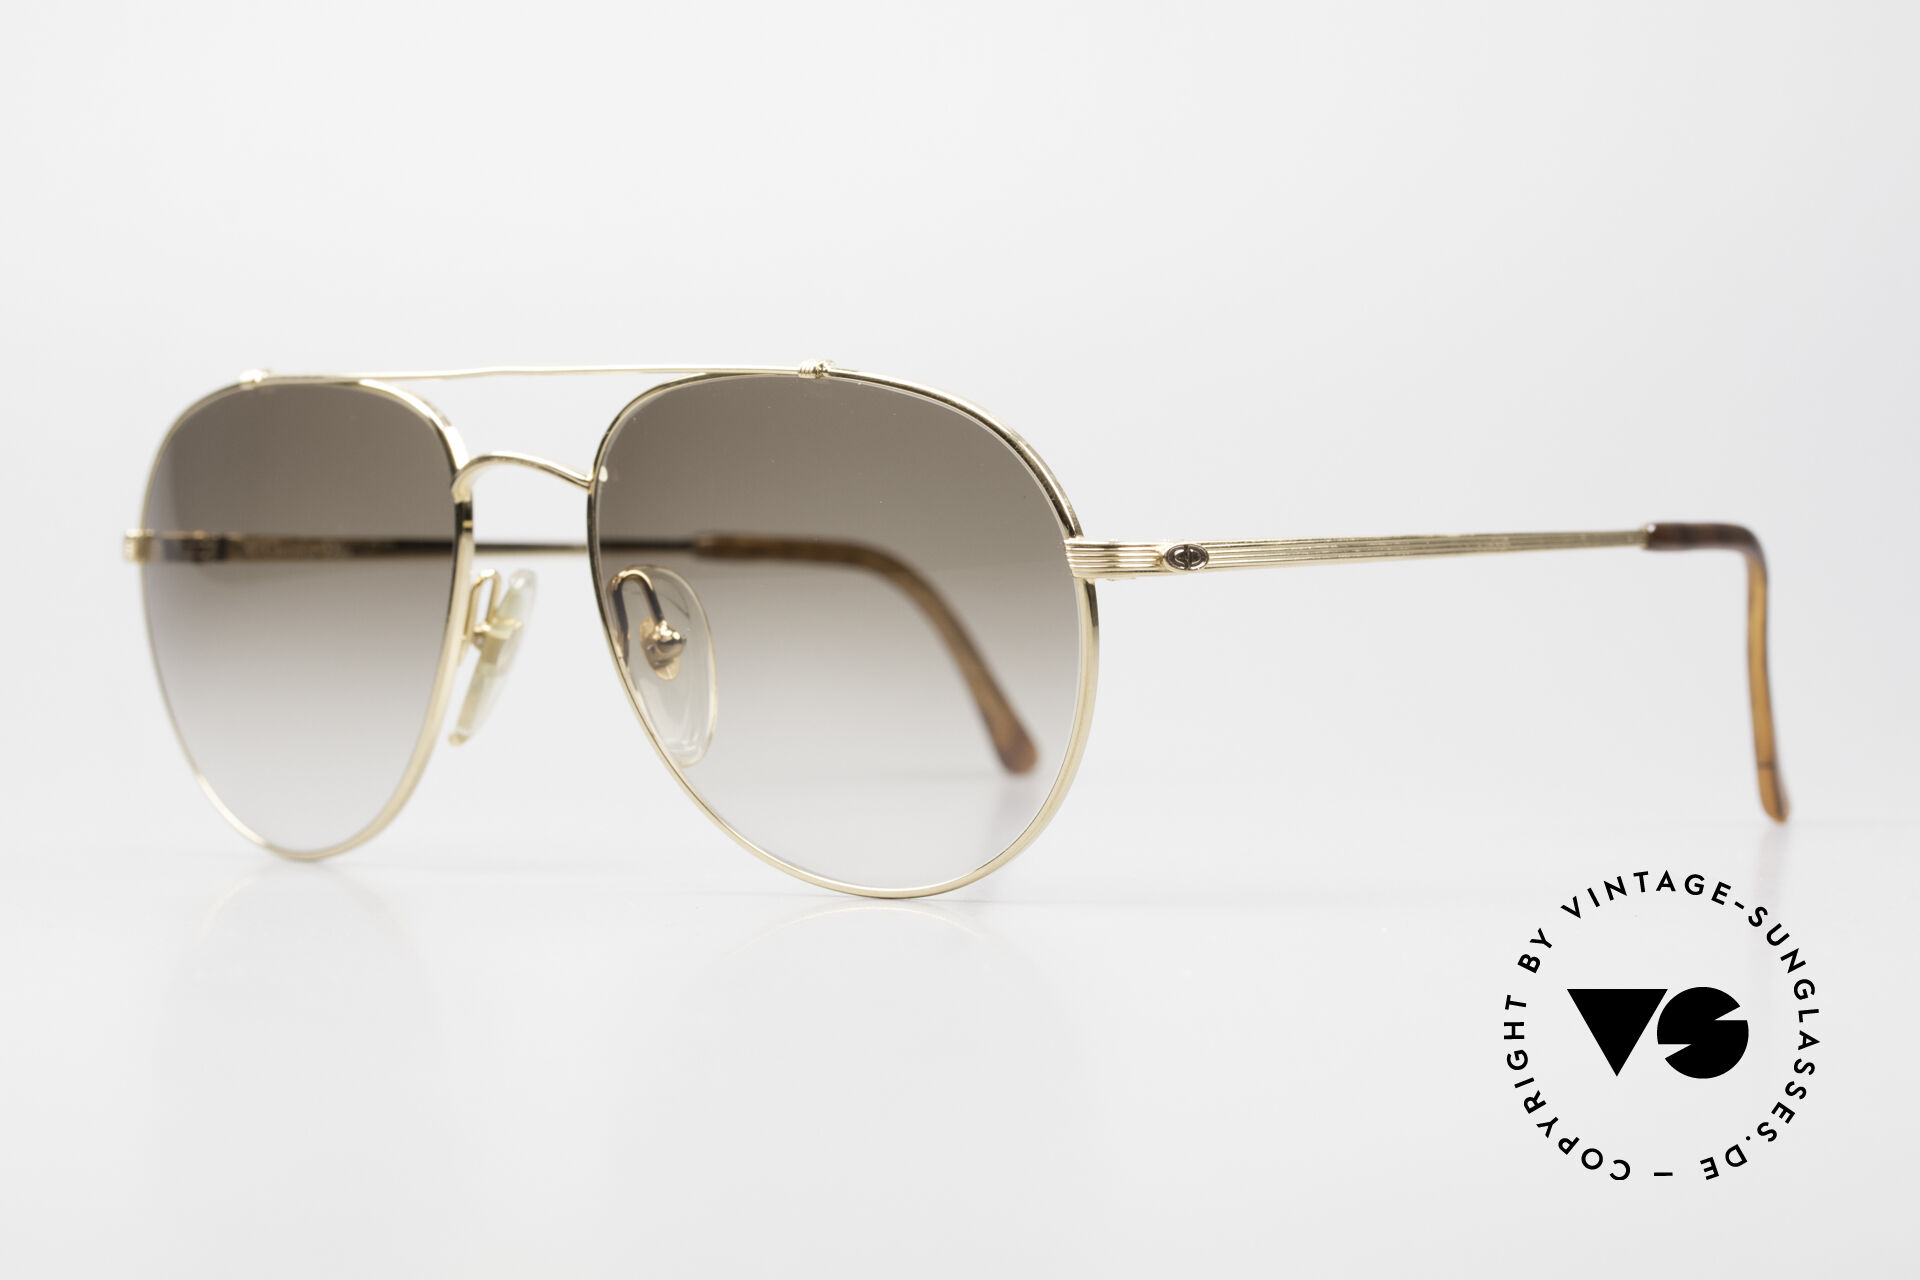 Sunglasses Christian Dior 2488 Rare 80 S Aviator Sunglasses